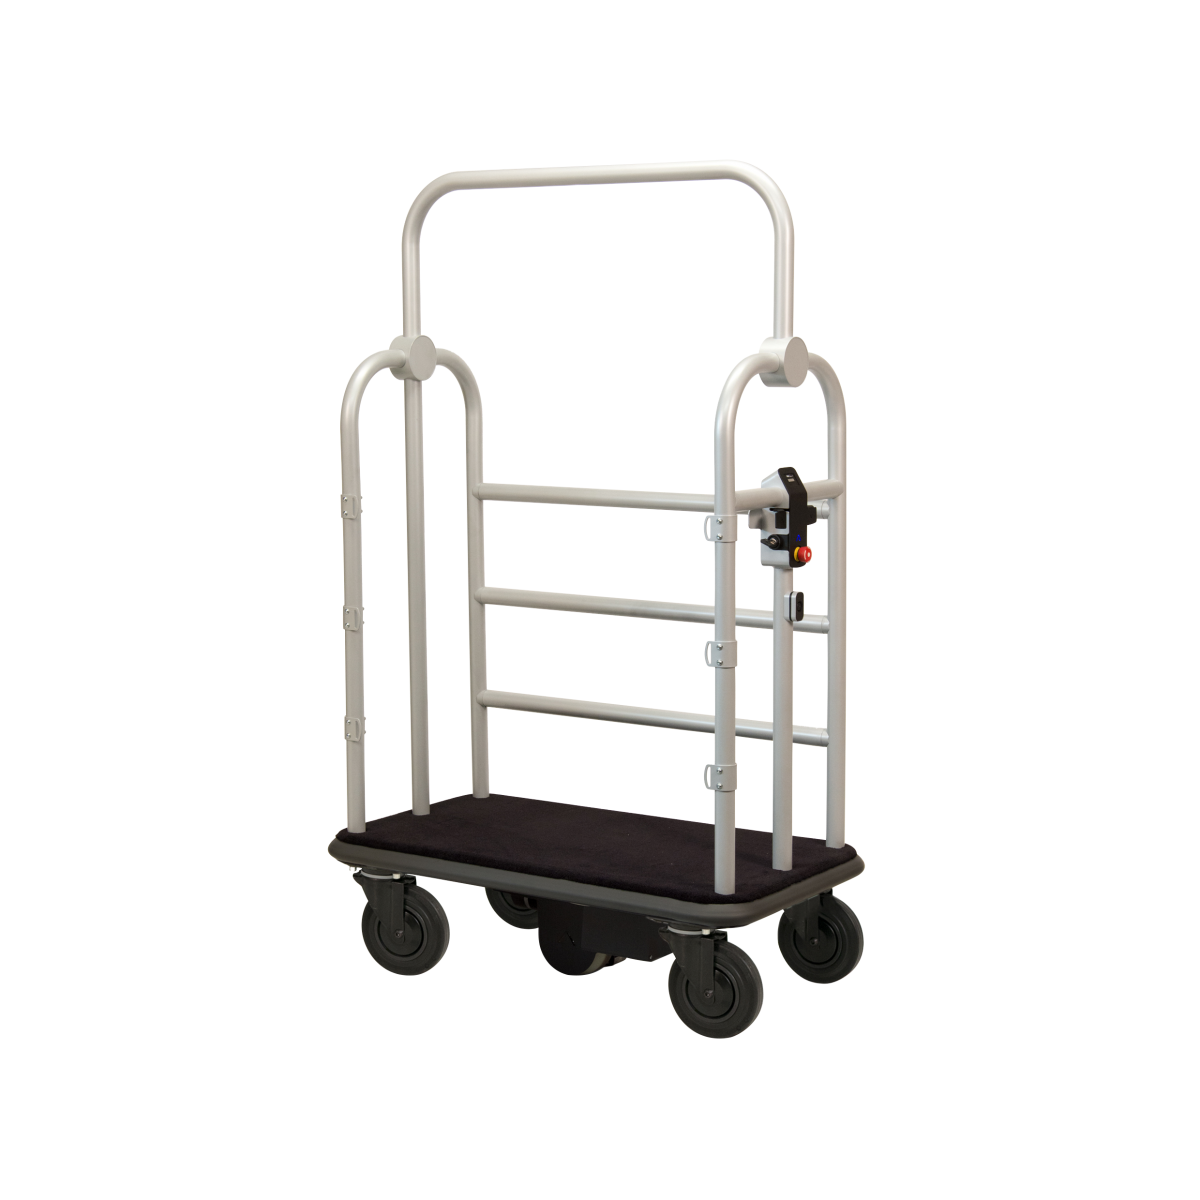 Vesuvio Airport 900 luggage trolley